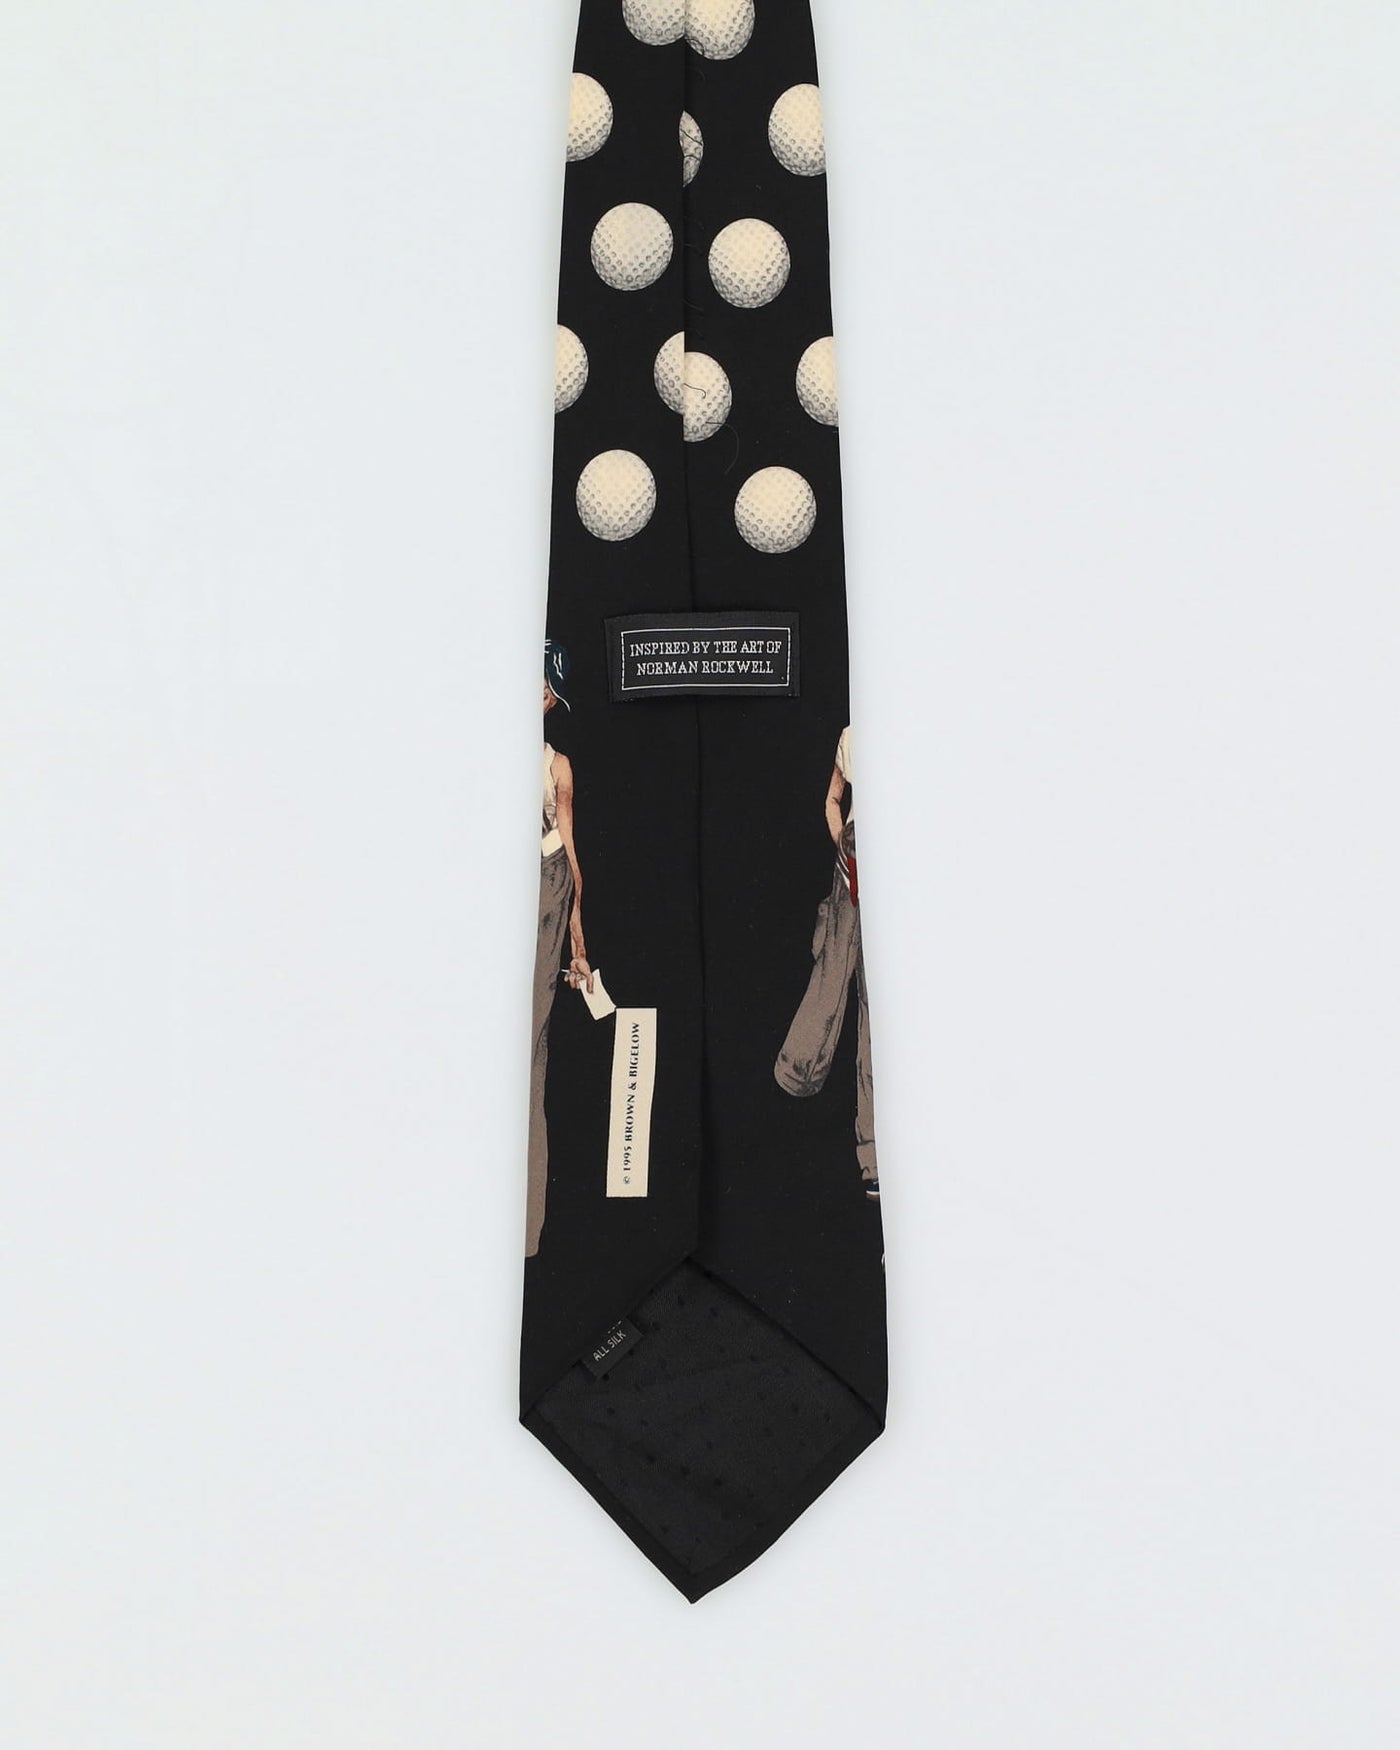 Vintage 90s Norman Rockwell Golfing Black Patterned Novelty Tie